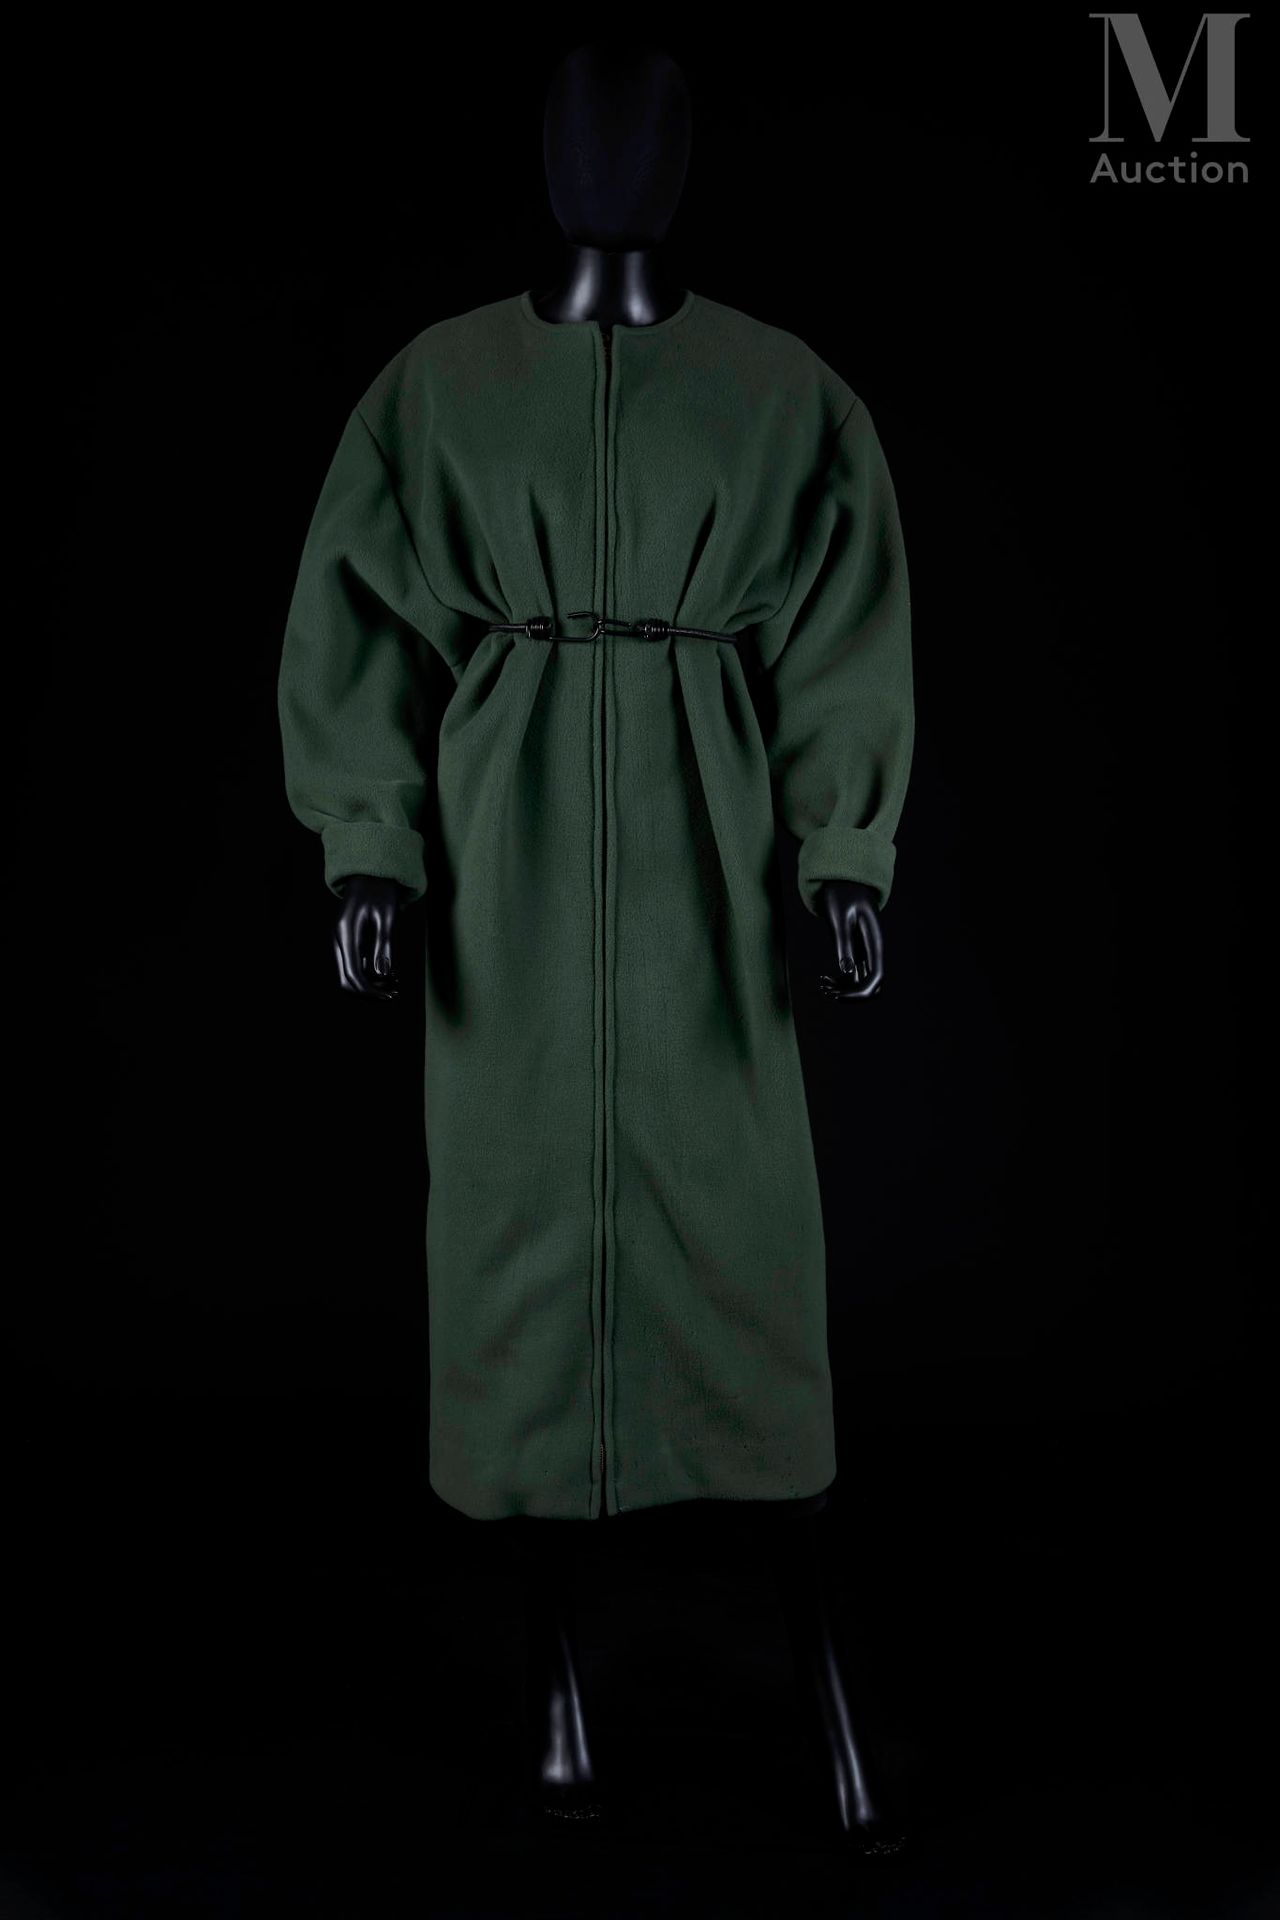 PACO RABANNE - Automne-hiver 1985/86 (look N°6) Abrigo
de lana verde
Raya negra,&hellip;